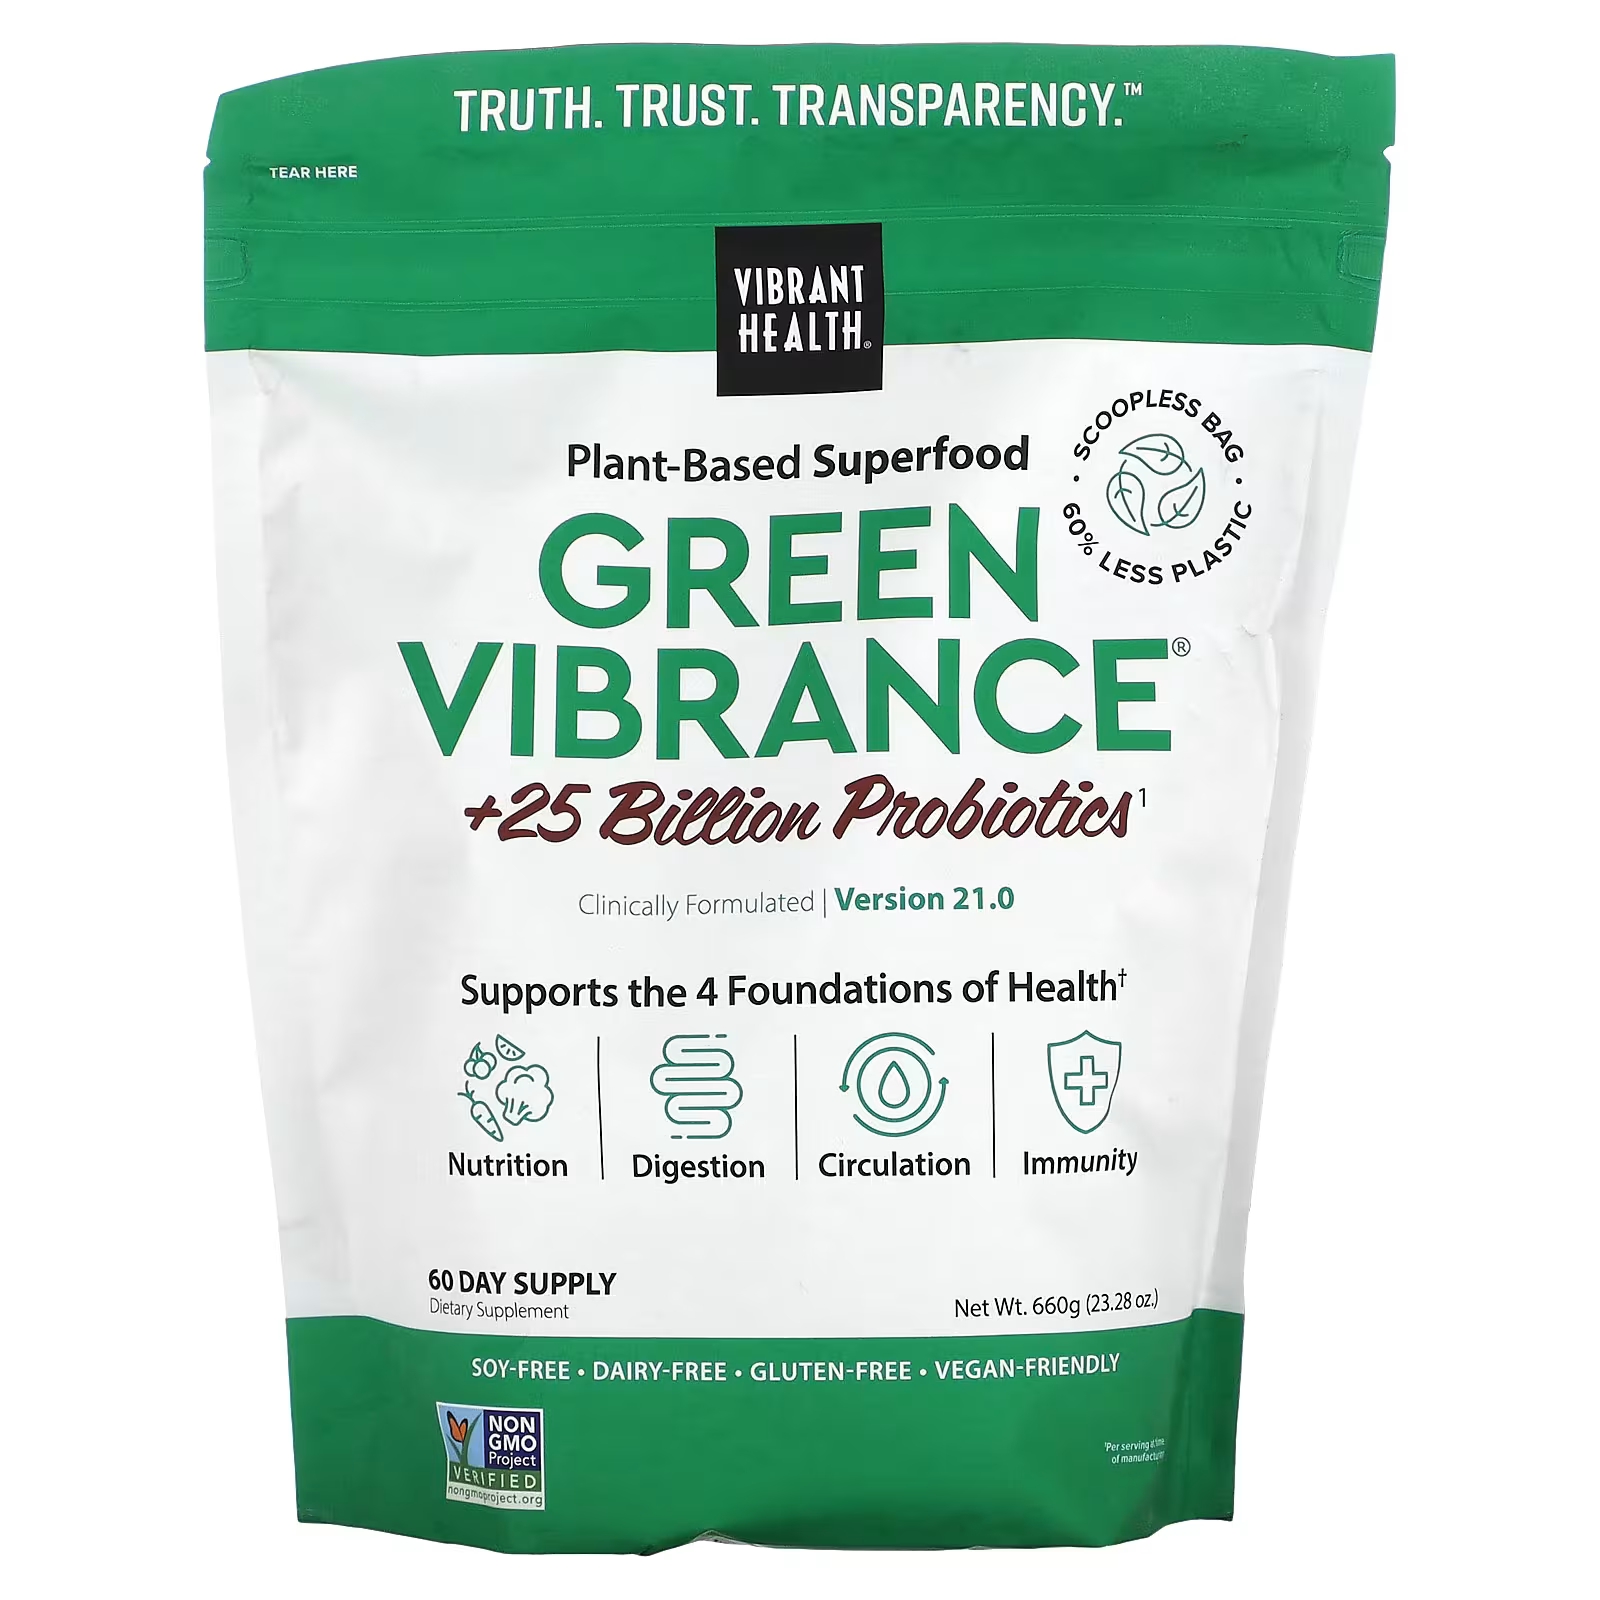 Пищевая добавка Vibrant Health Green Vibrance, 23,28 унции vibrant health green vibrance 25 млрд пробиотиков версия 19 1 168 г 5 96 унции